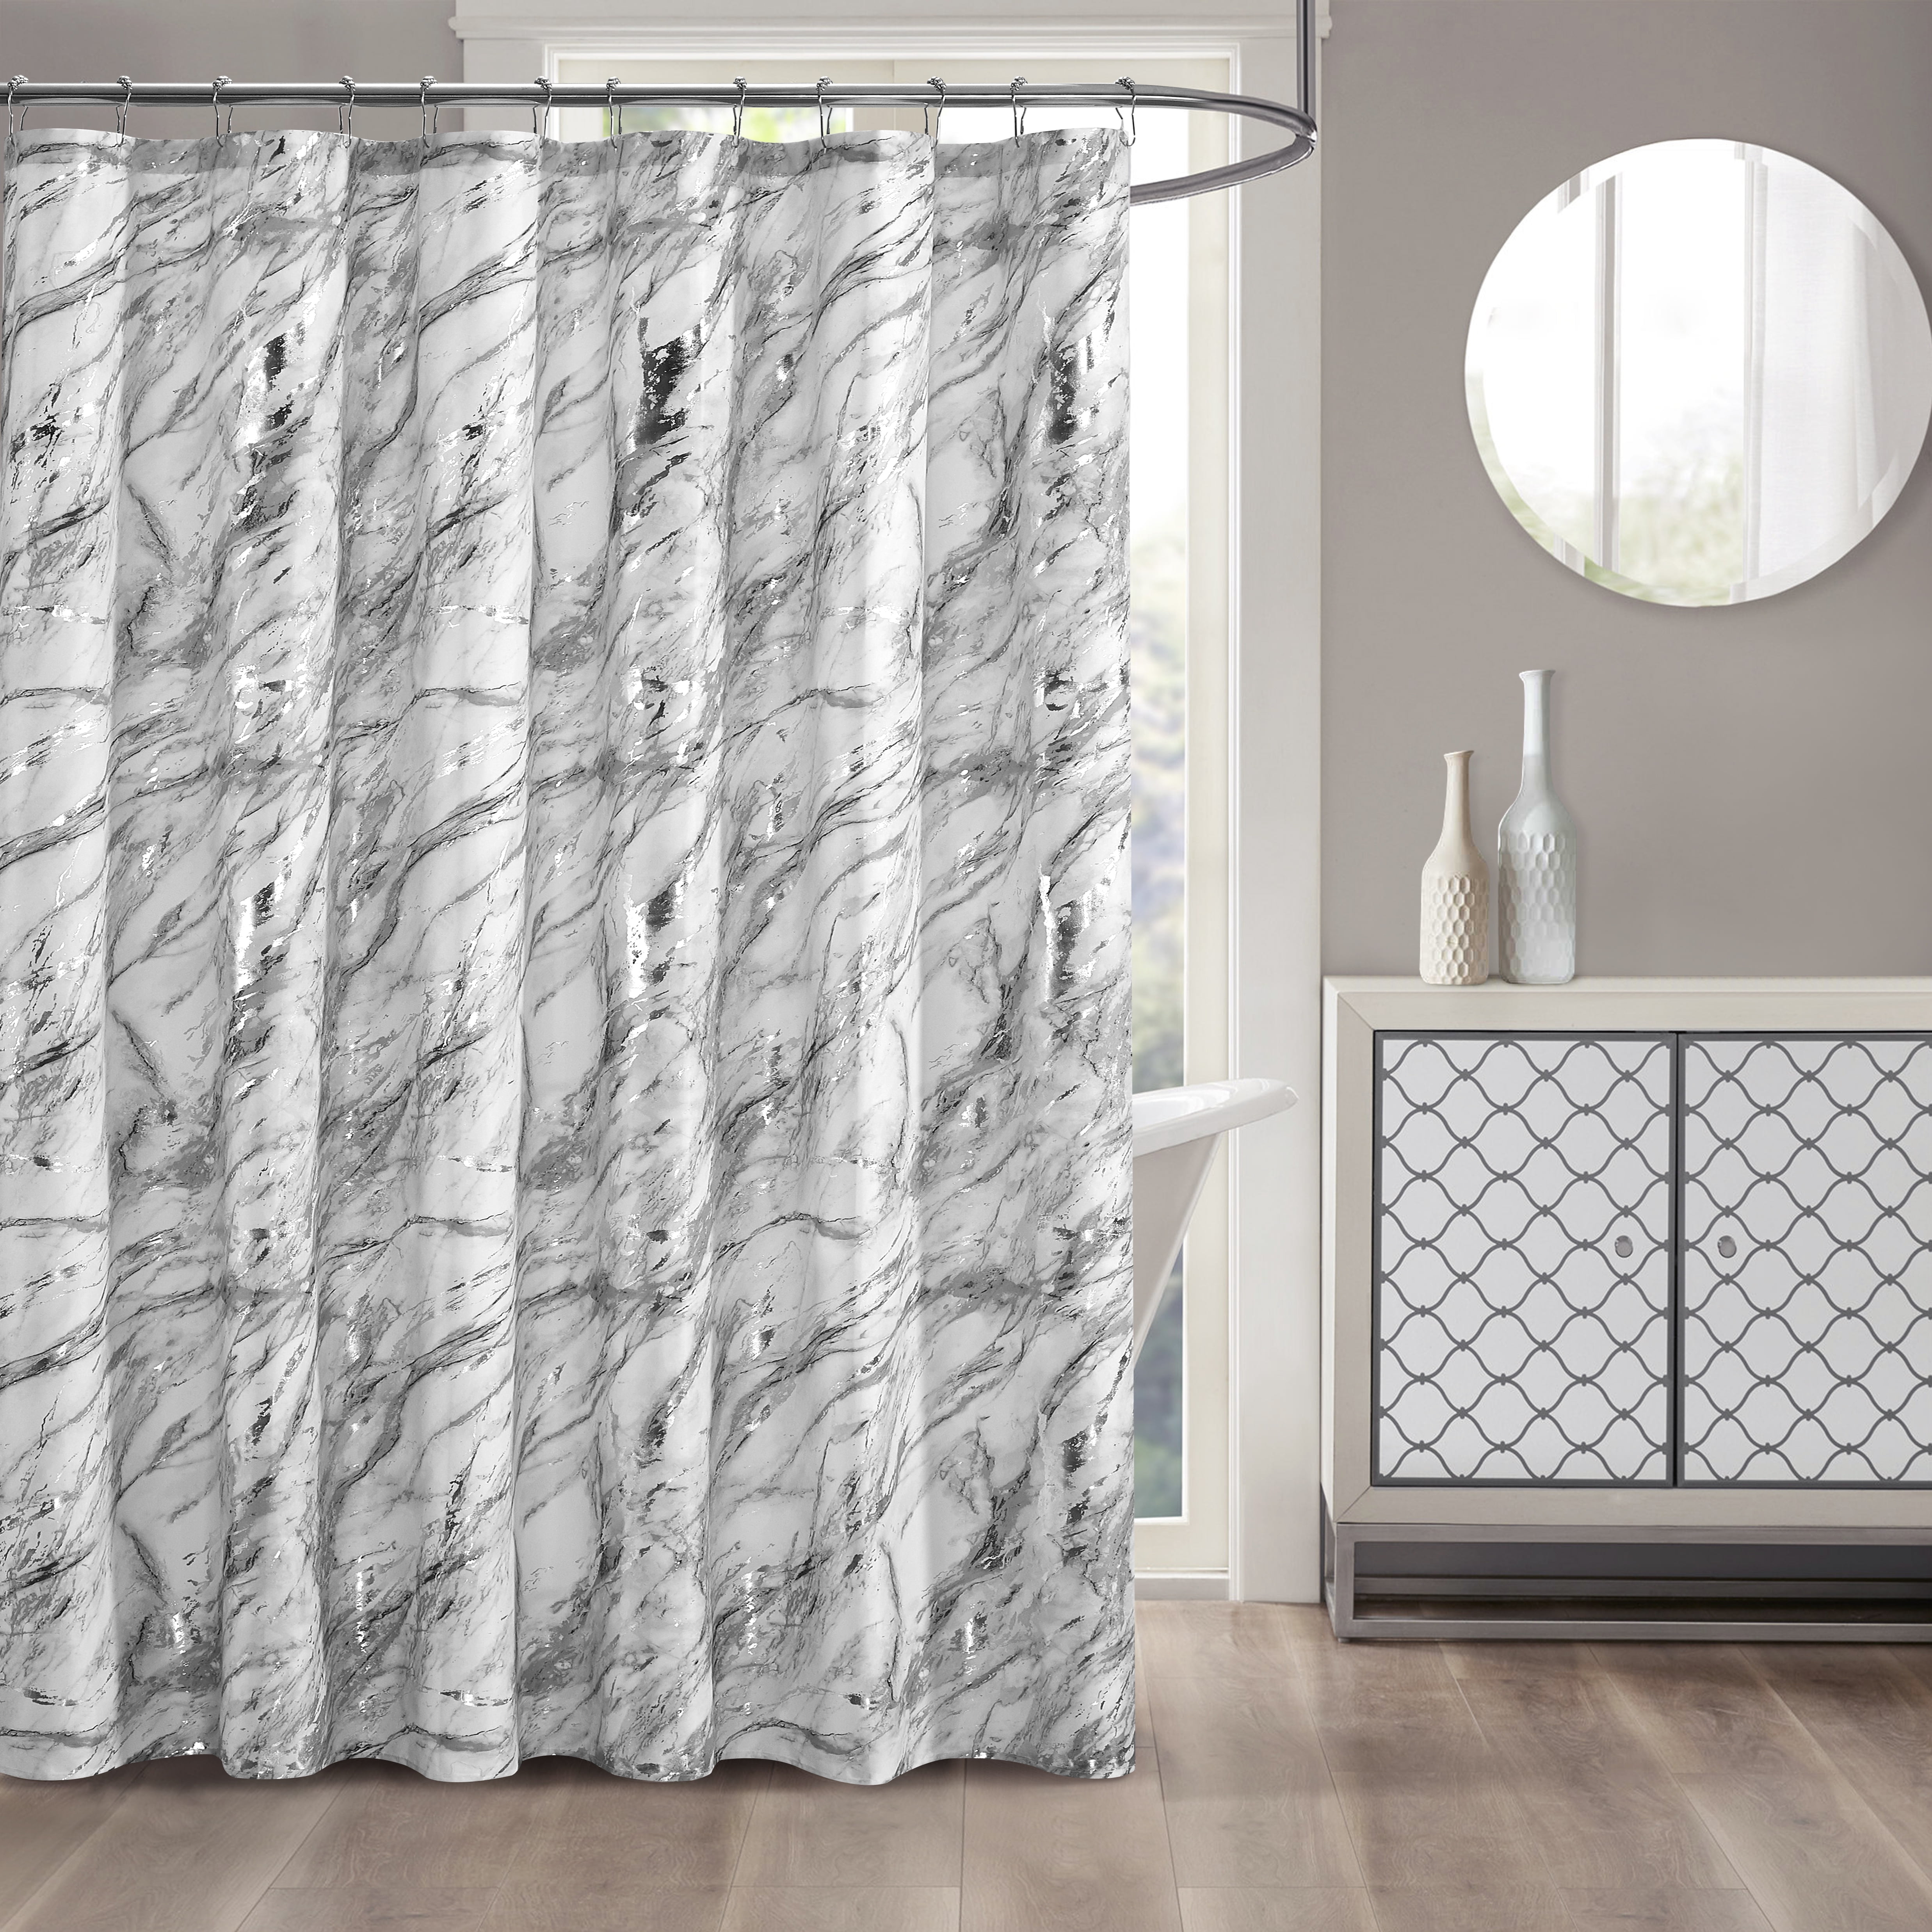 Soccer Football Field Custom Waterproof Fabric Bathroom Shower Curtain Hooks Set 